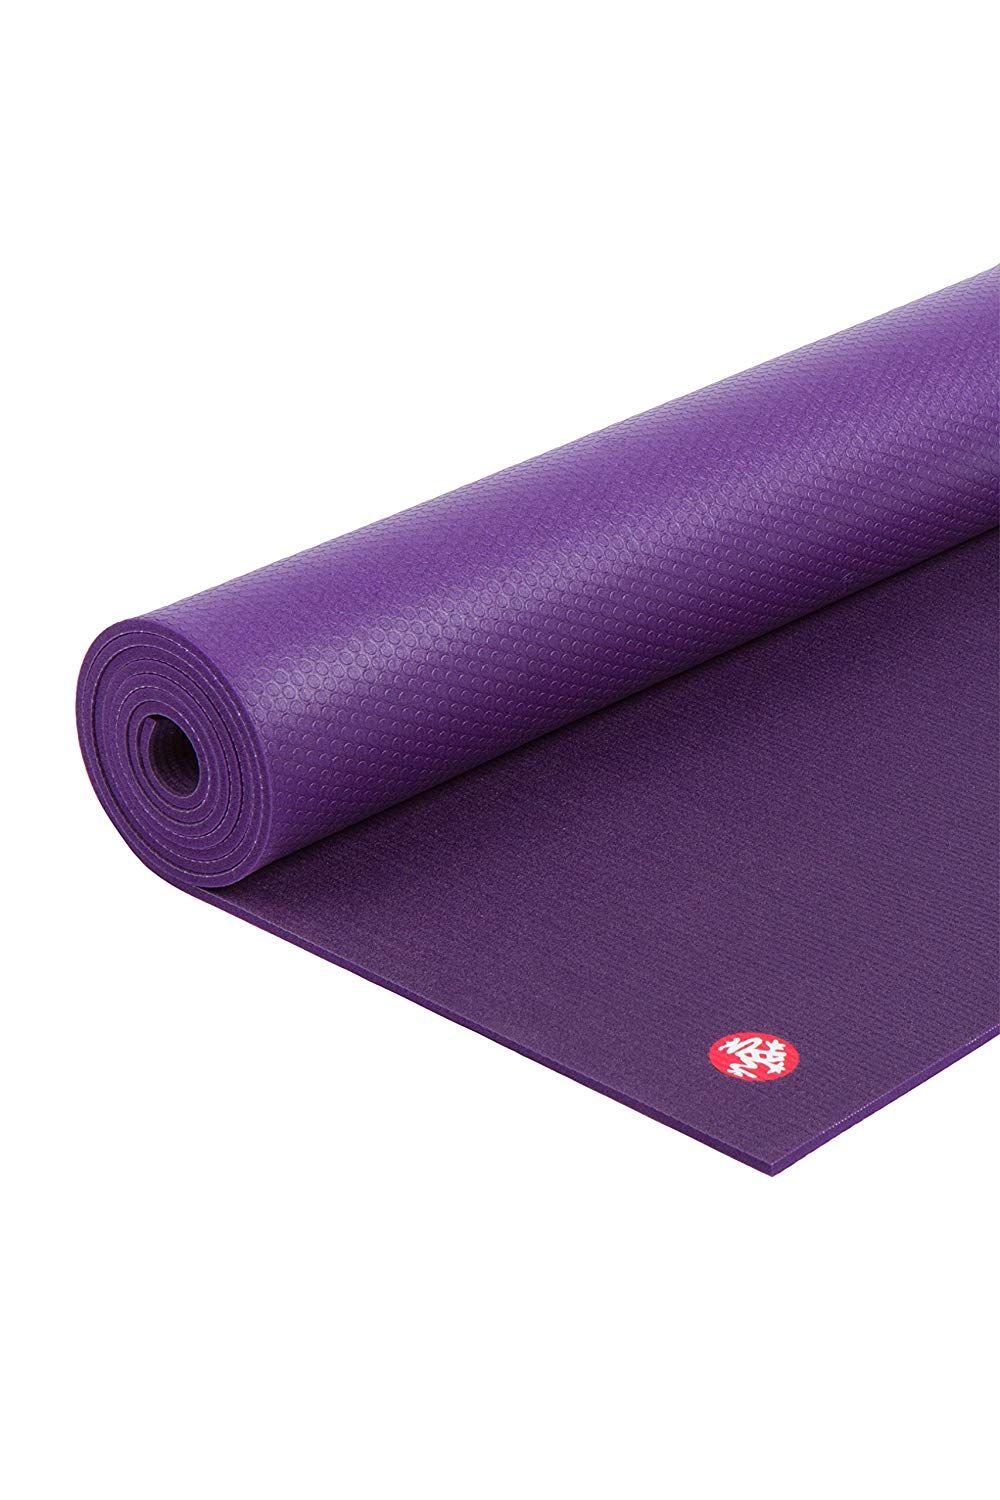 Manduka PRO Yoga and Pilates Mat, Mats -  Canada